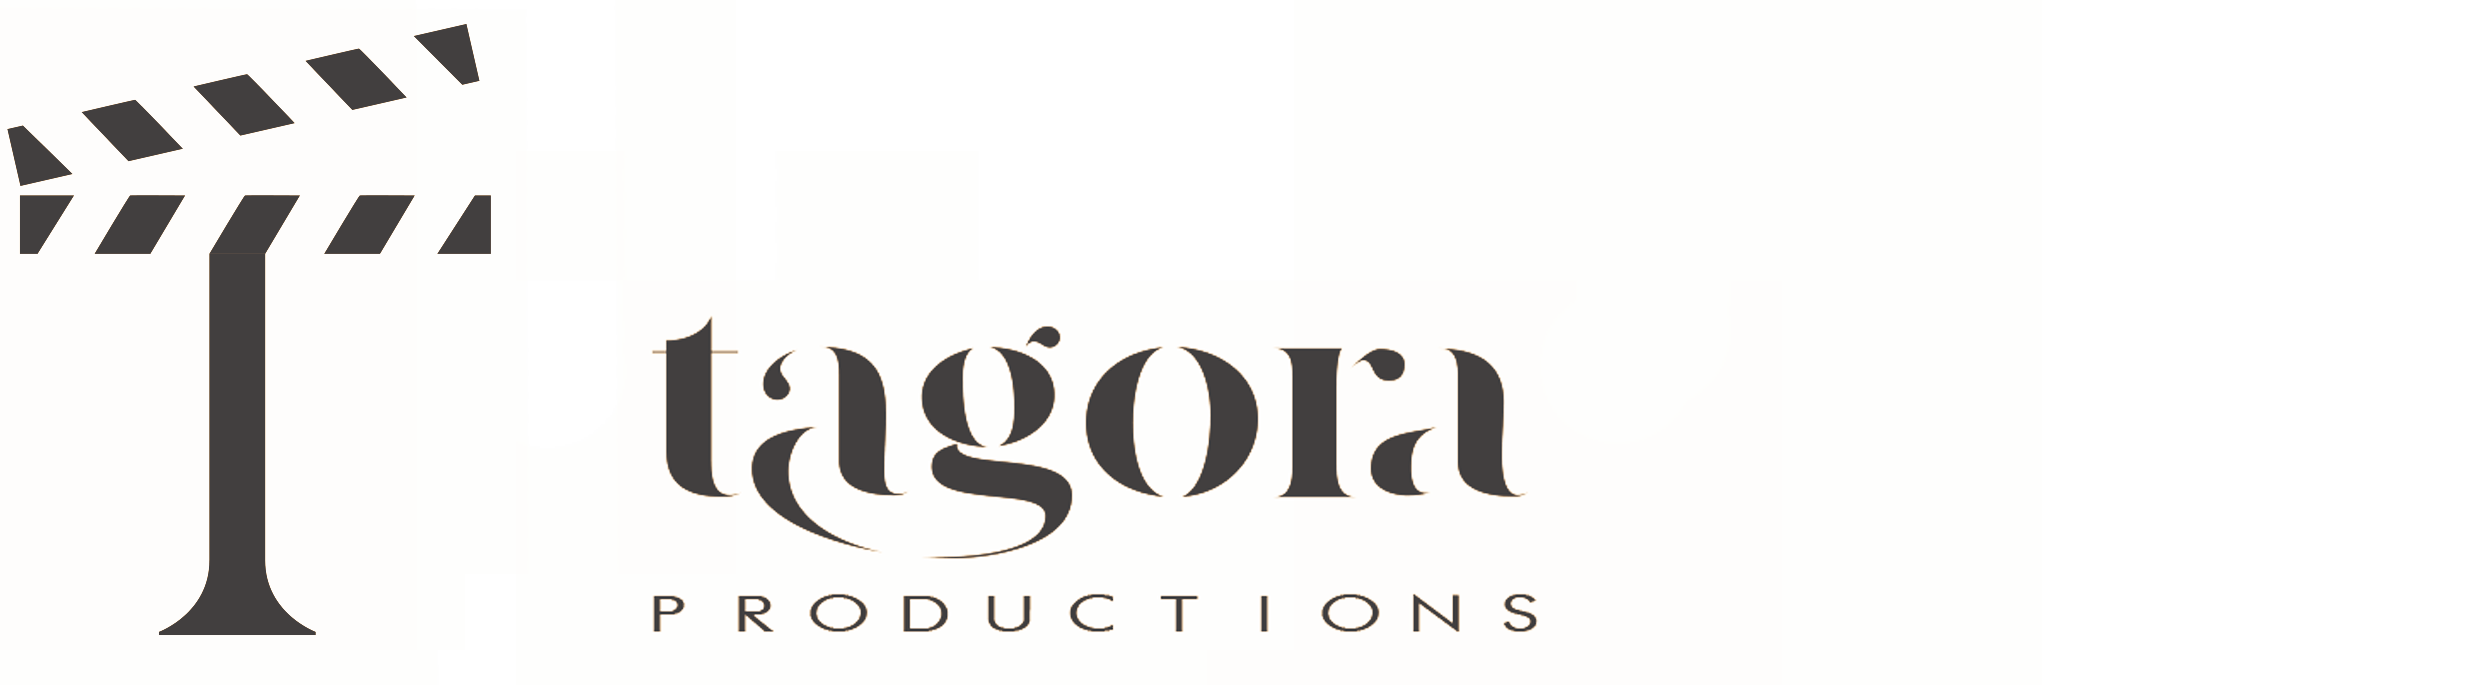 Tagora Productions